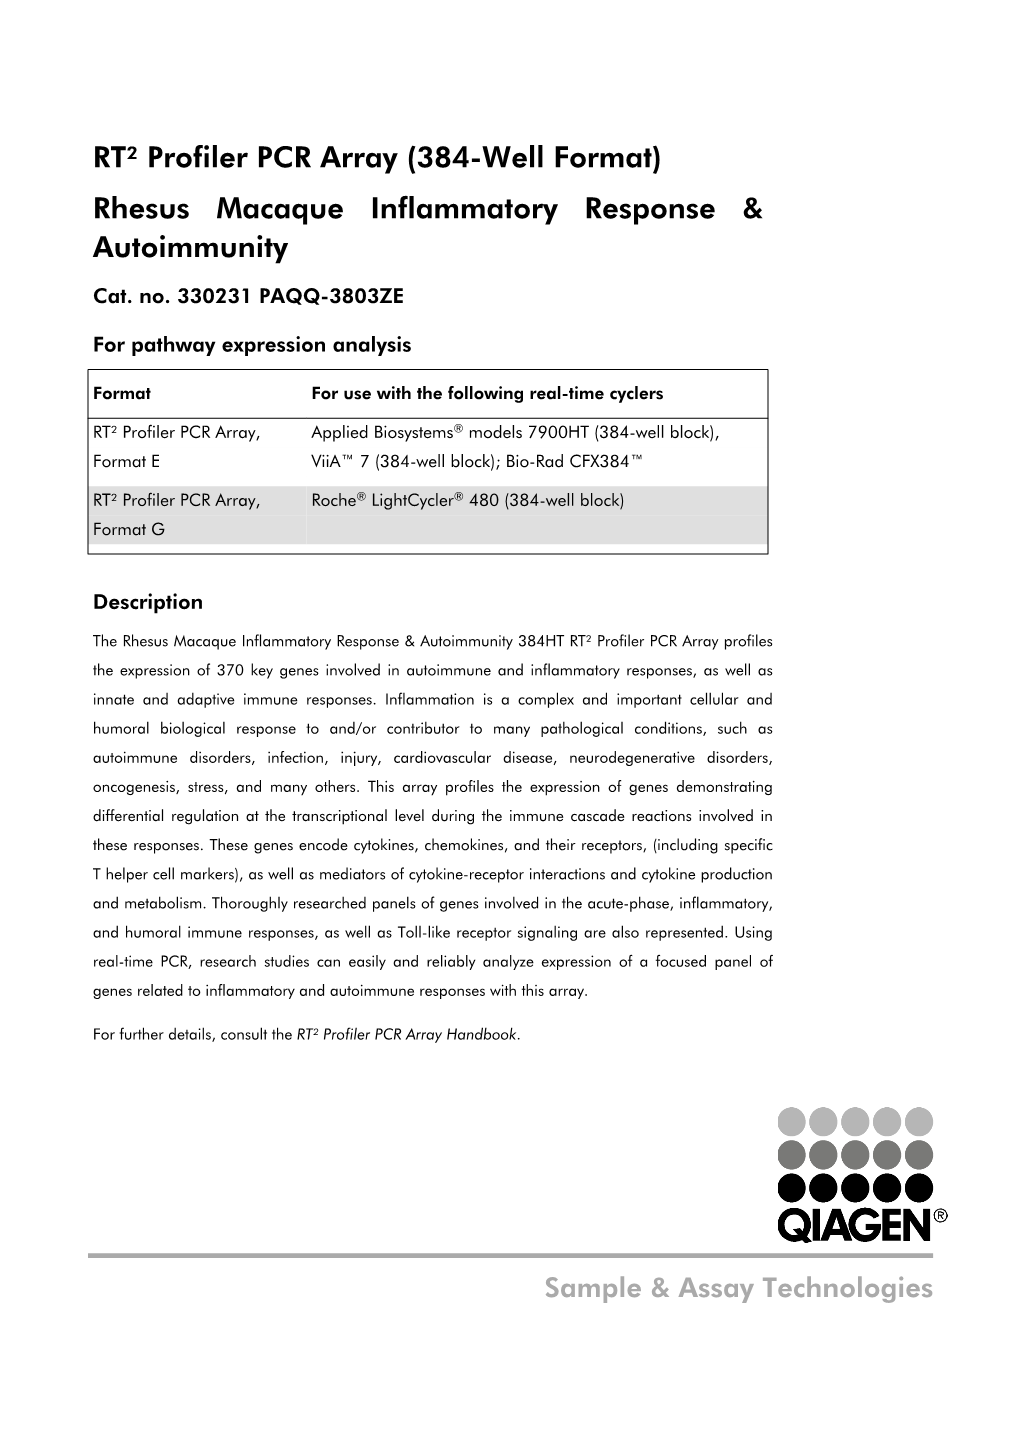 RT² Profiler PCR Array (384-Well Format) Rhesus Macaque Inflammatory Response & Autoimmunity